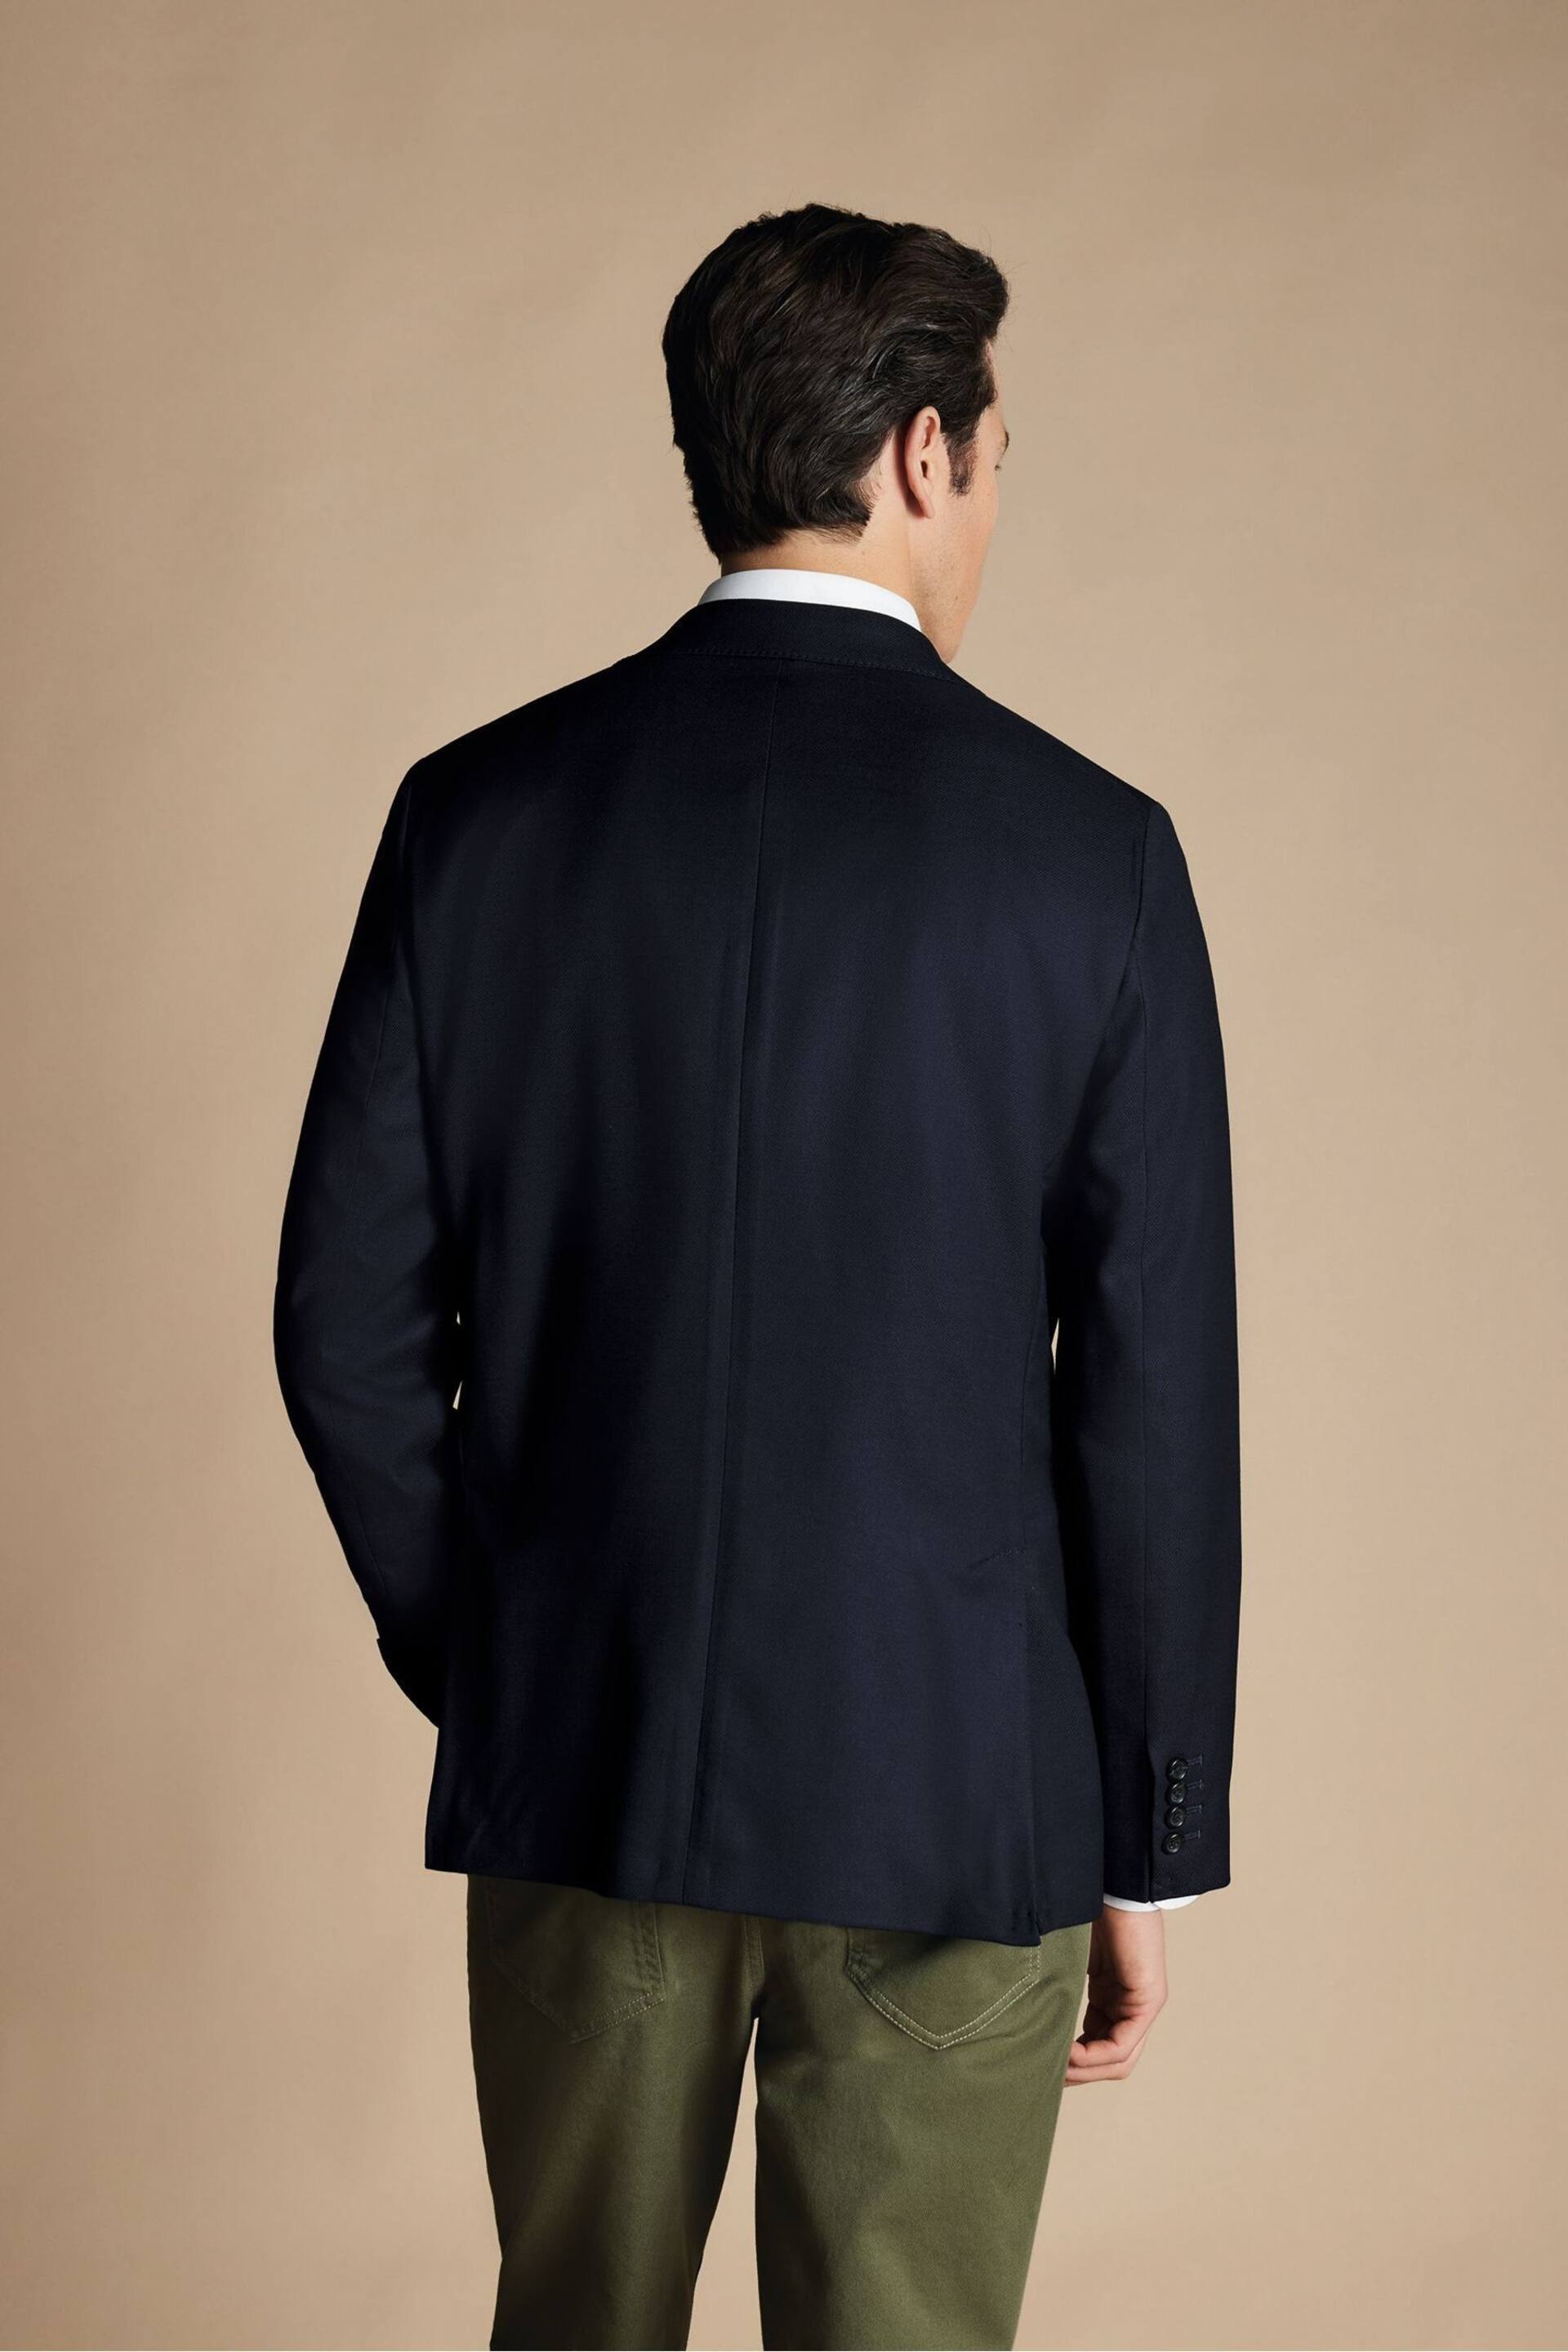 Charles Tyrwhitt Blue Slim Fit Luxury Italian Hopsack Jacket - Image 2 of 5